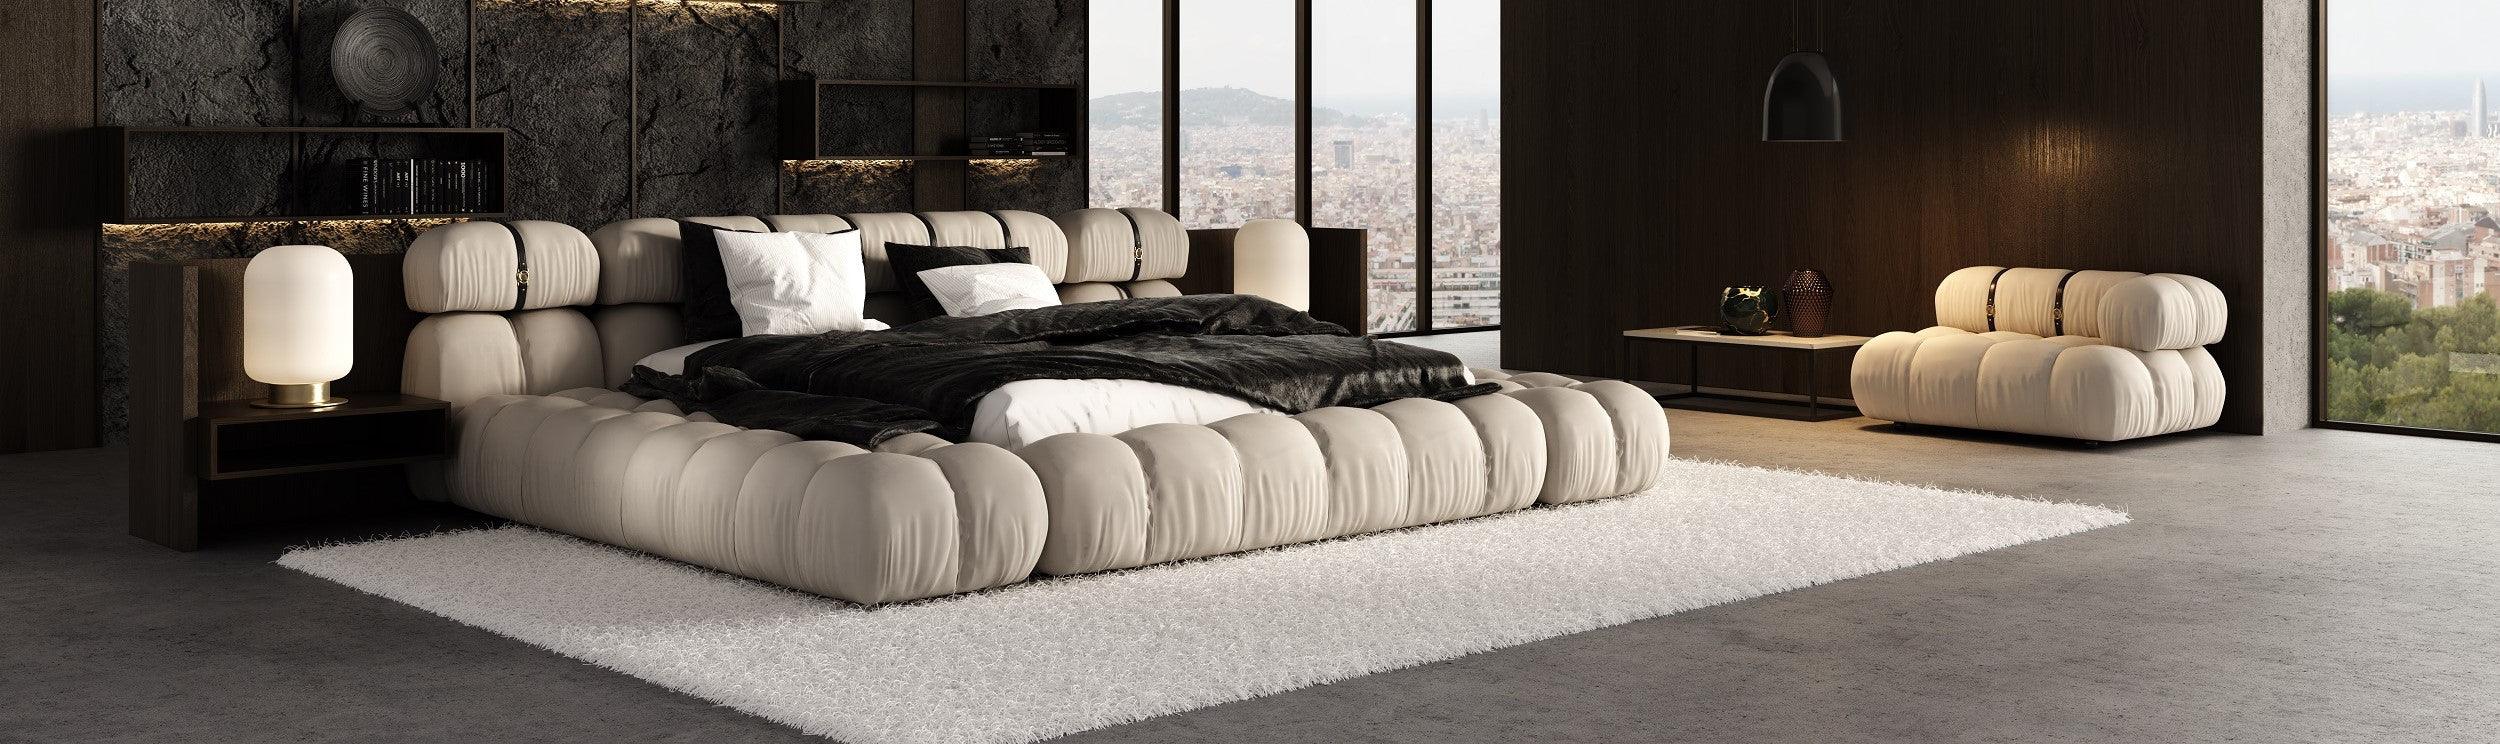 łóżko beżowe luksusowe